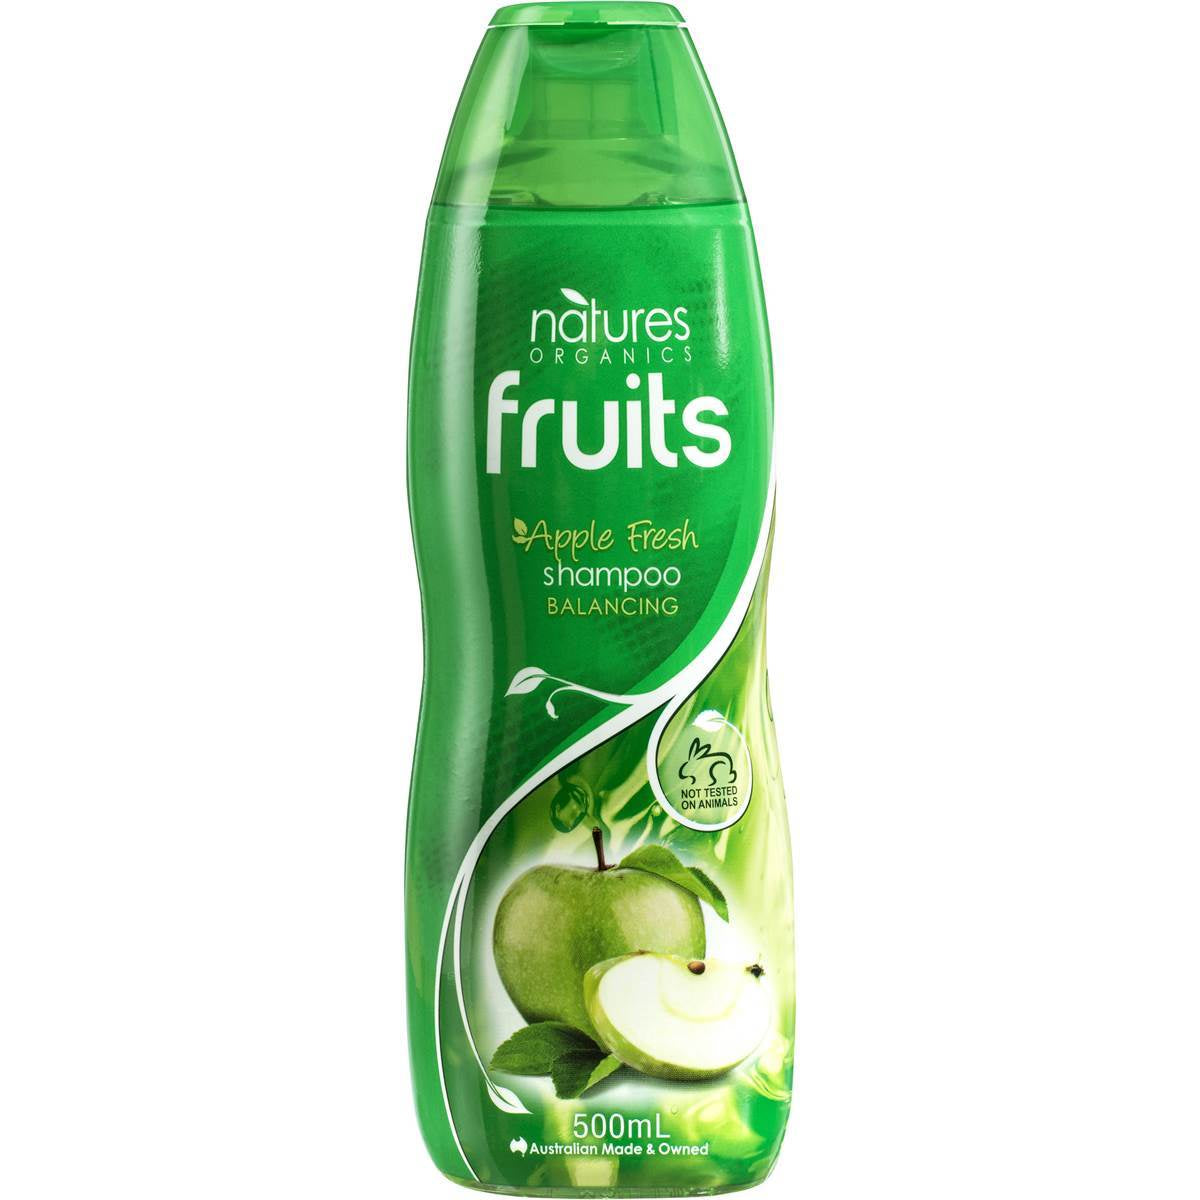 Natures Organics Fruits Shampoo Balance Apple Fresh 500ml